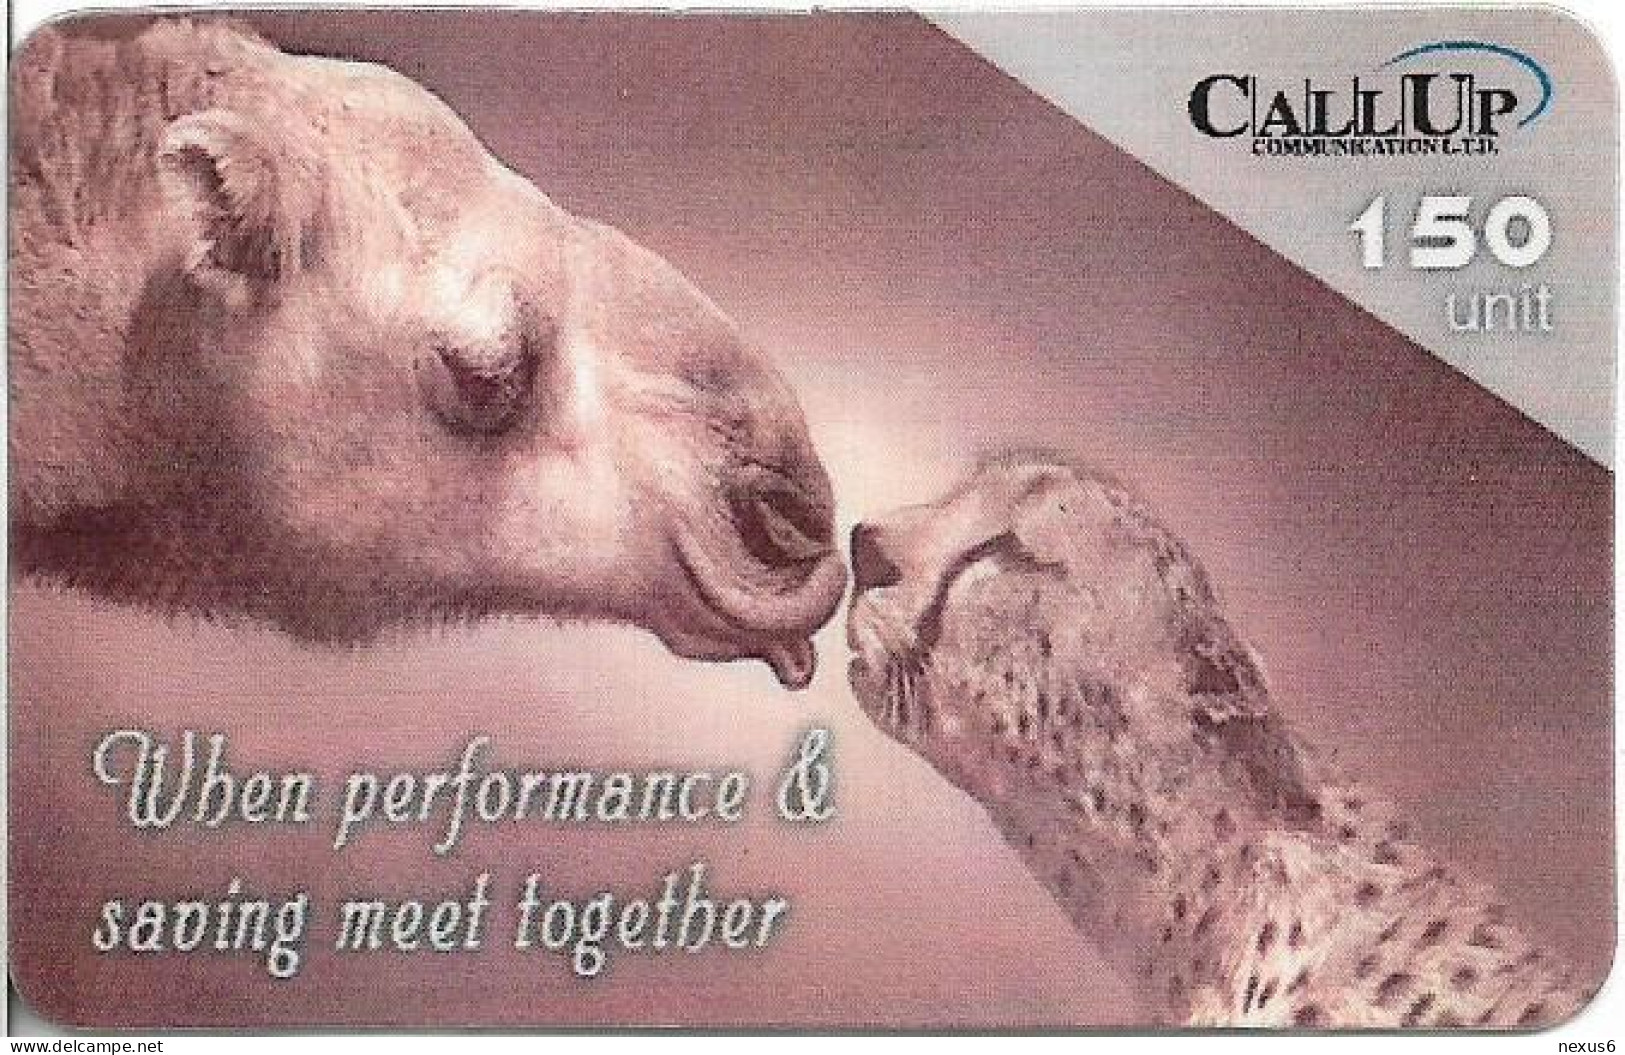 Israel - CallUp Commun. Ltd - Cheetah & Camel, Exp.31.12.2001, Remote Mem. 150Units, Used - Israël